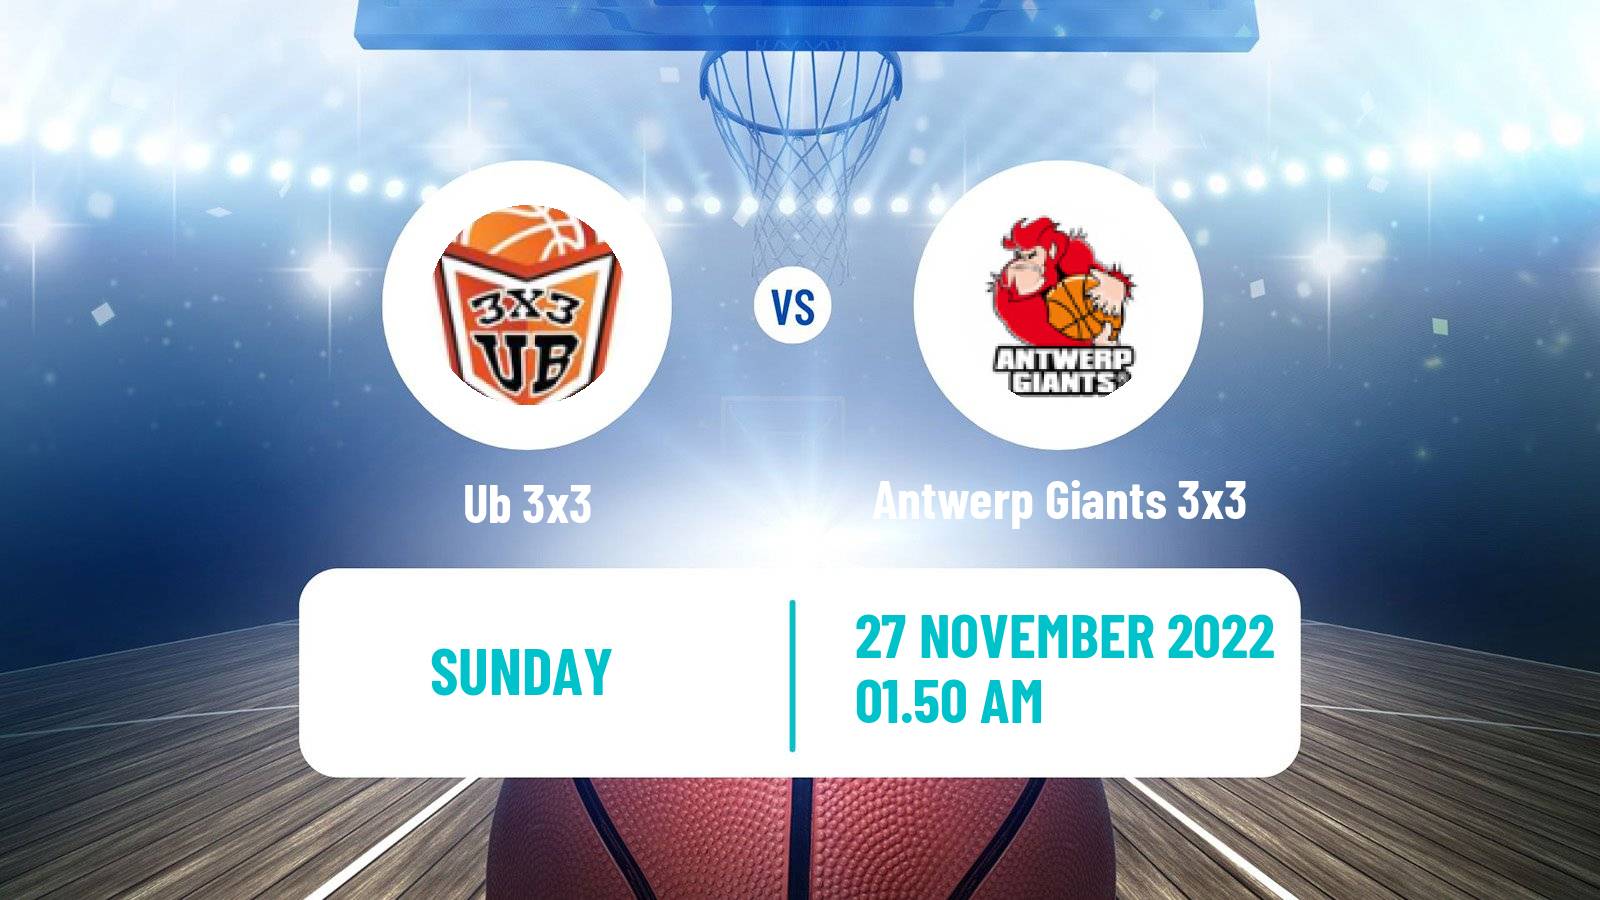 Basketball World Tour Hong Kong 3x3 Ub 3x3 - Antwerp Giants 3x3